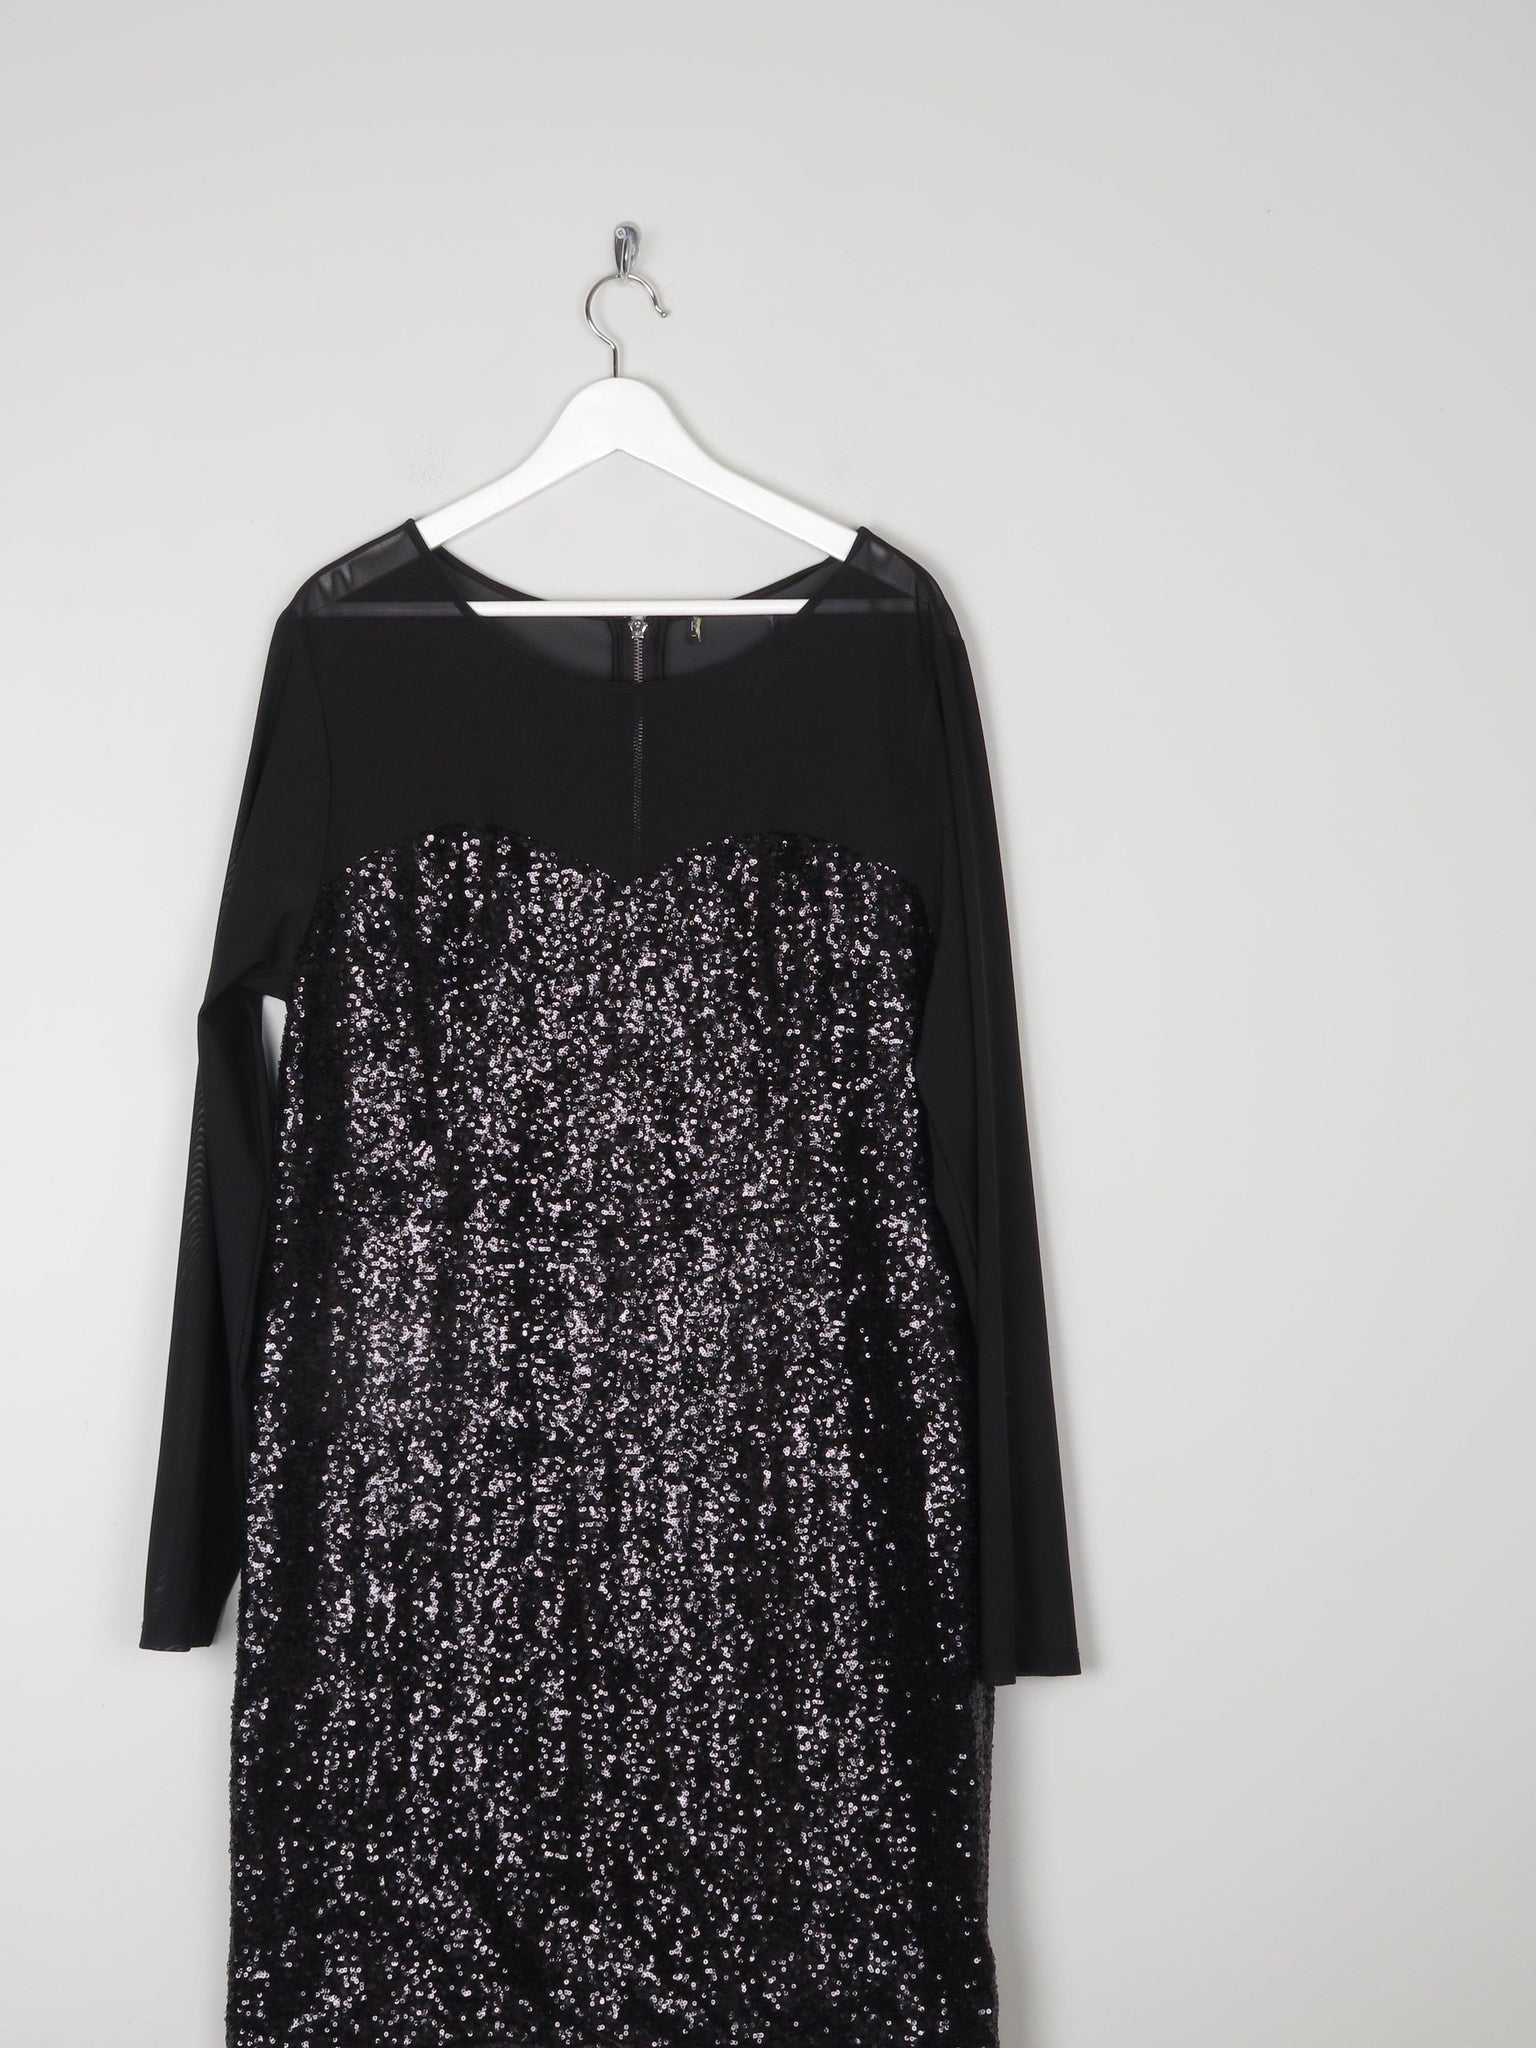 New Black Sequin & Black Dress XL/XXL - The Harlequin